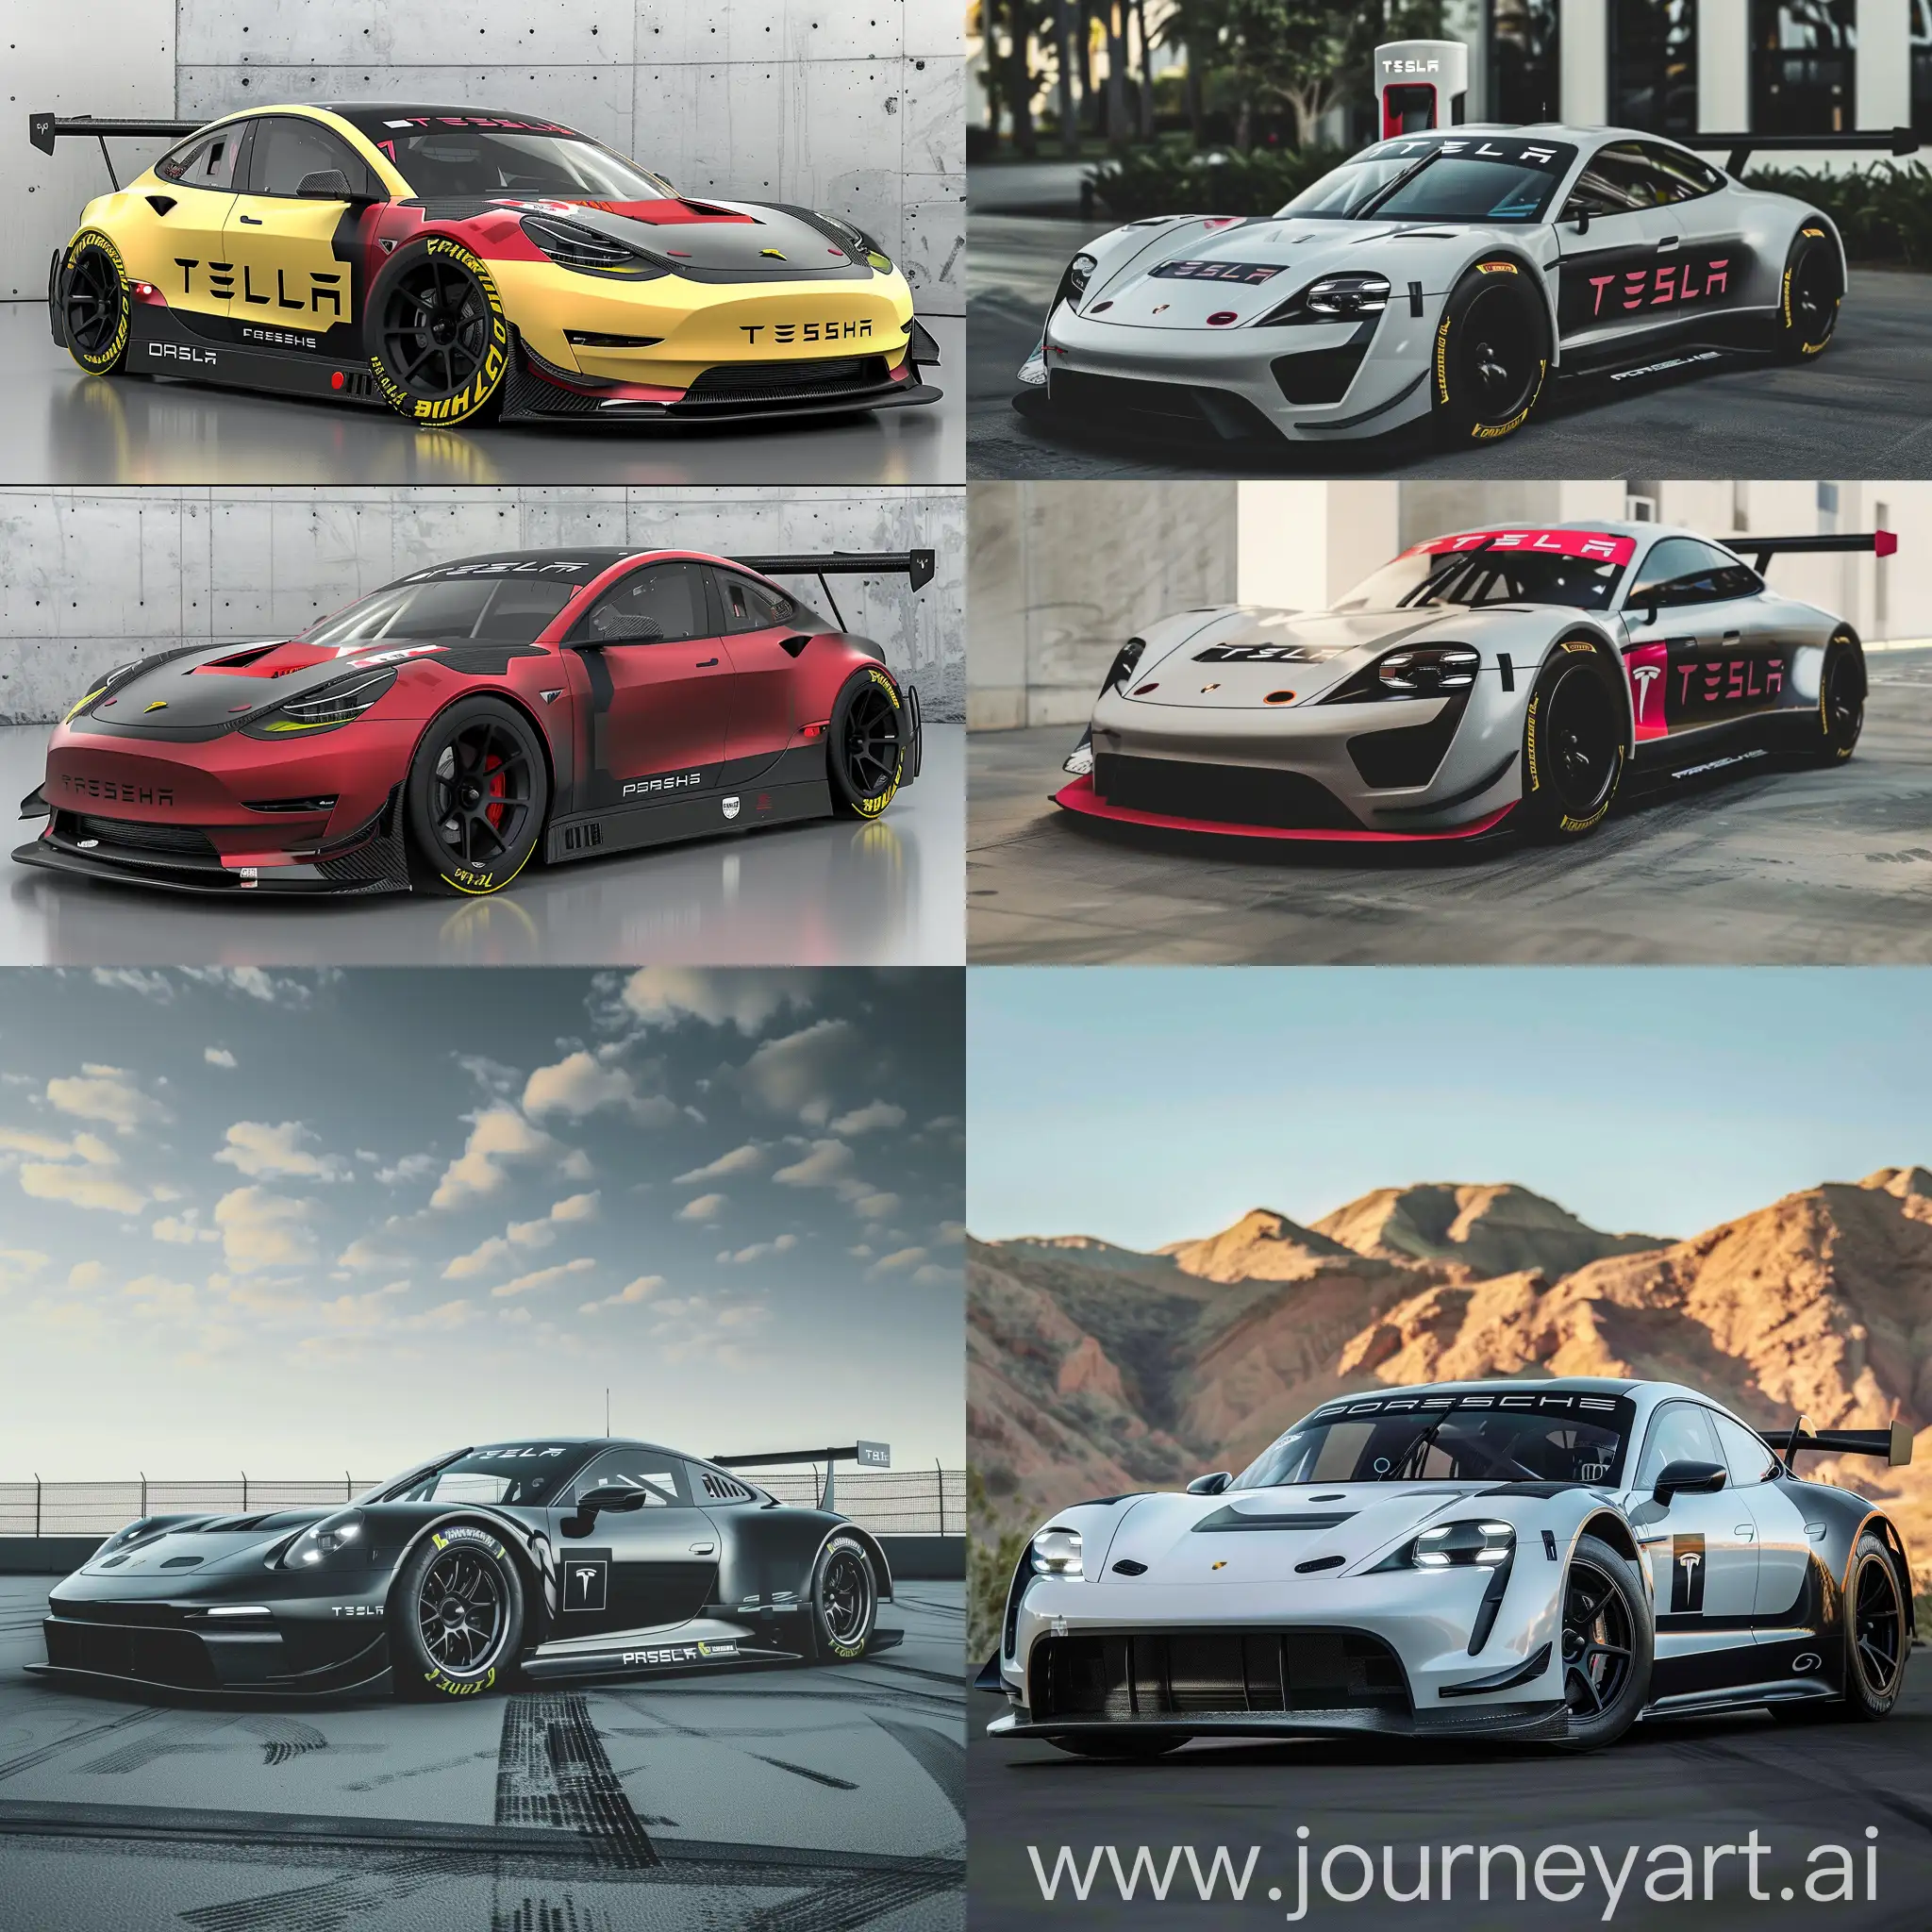 Futuristic-Tesla-Racing-Car-Design-vs-Porsche-911-Sleek-V6-Exterior-Comparison